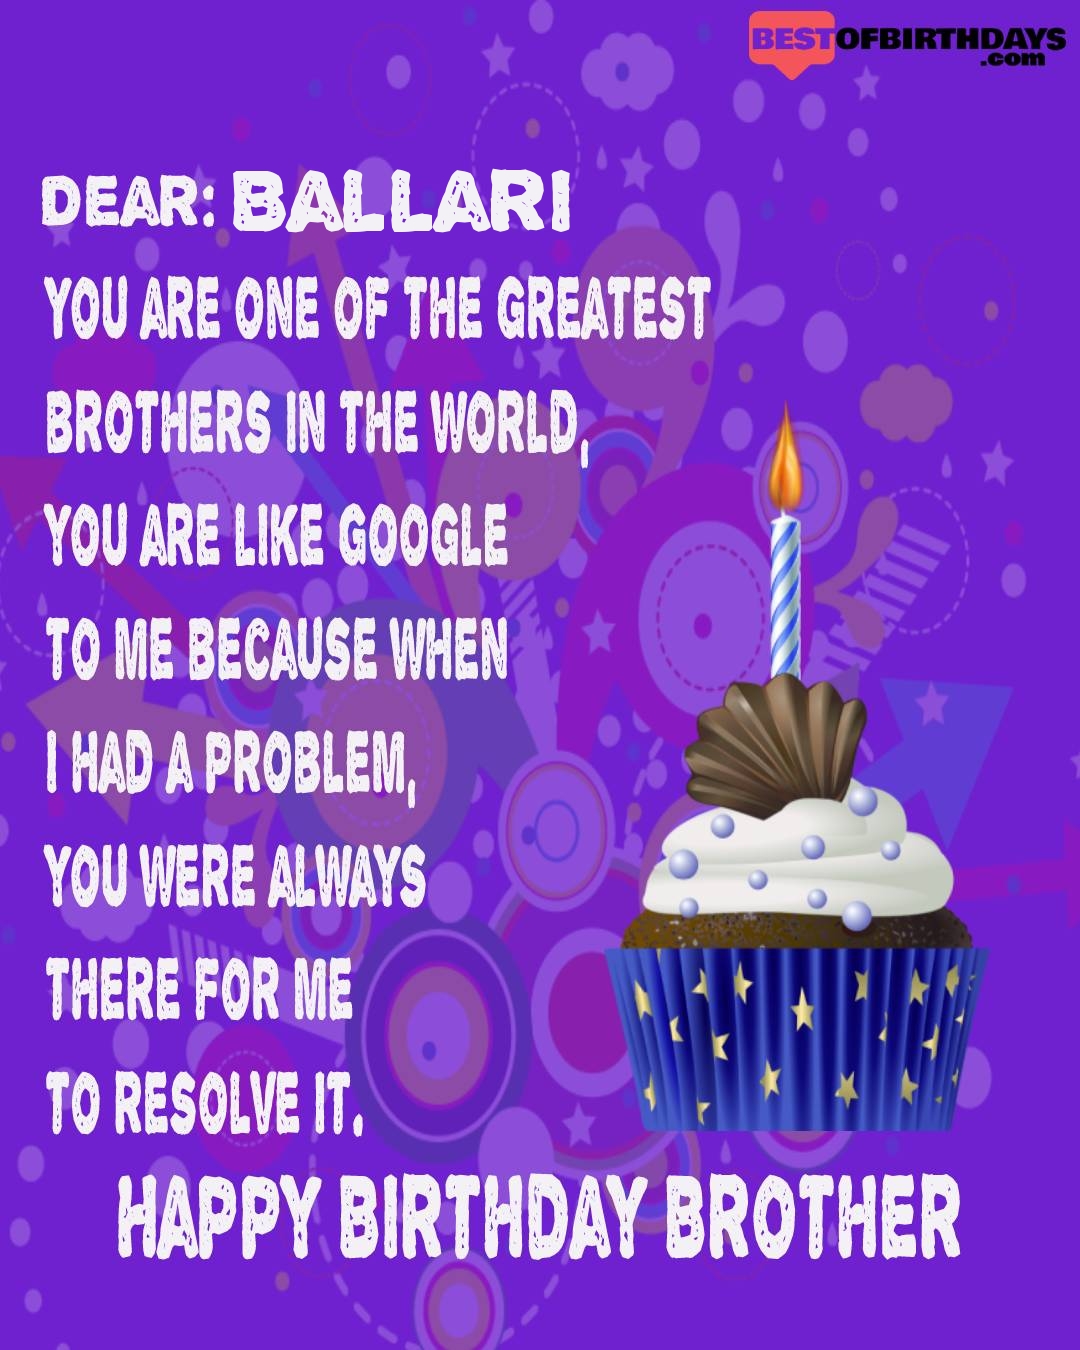 Happy birthday ballari bhai brother bro